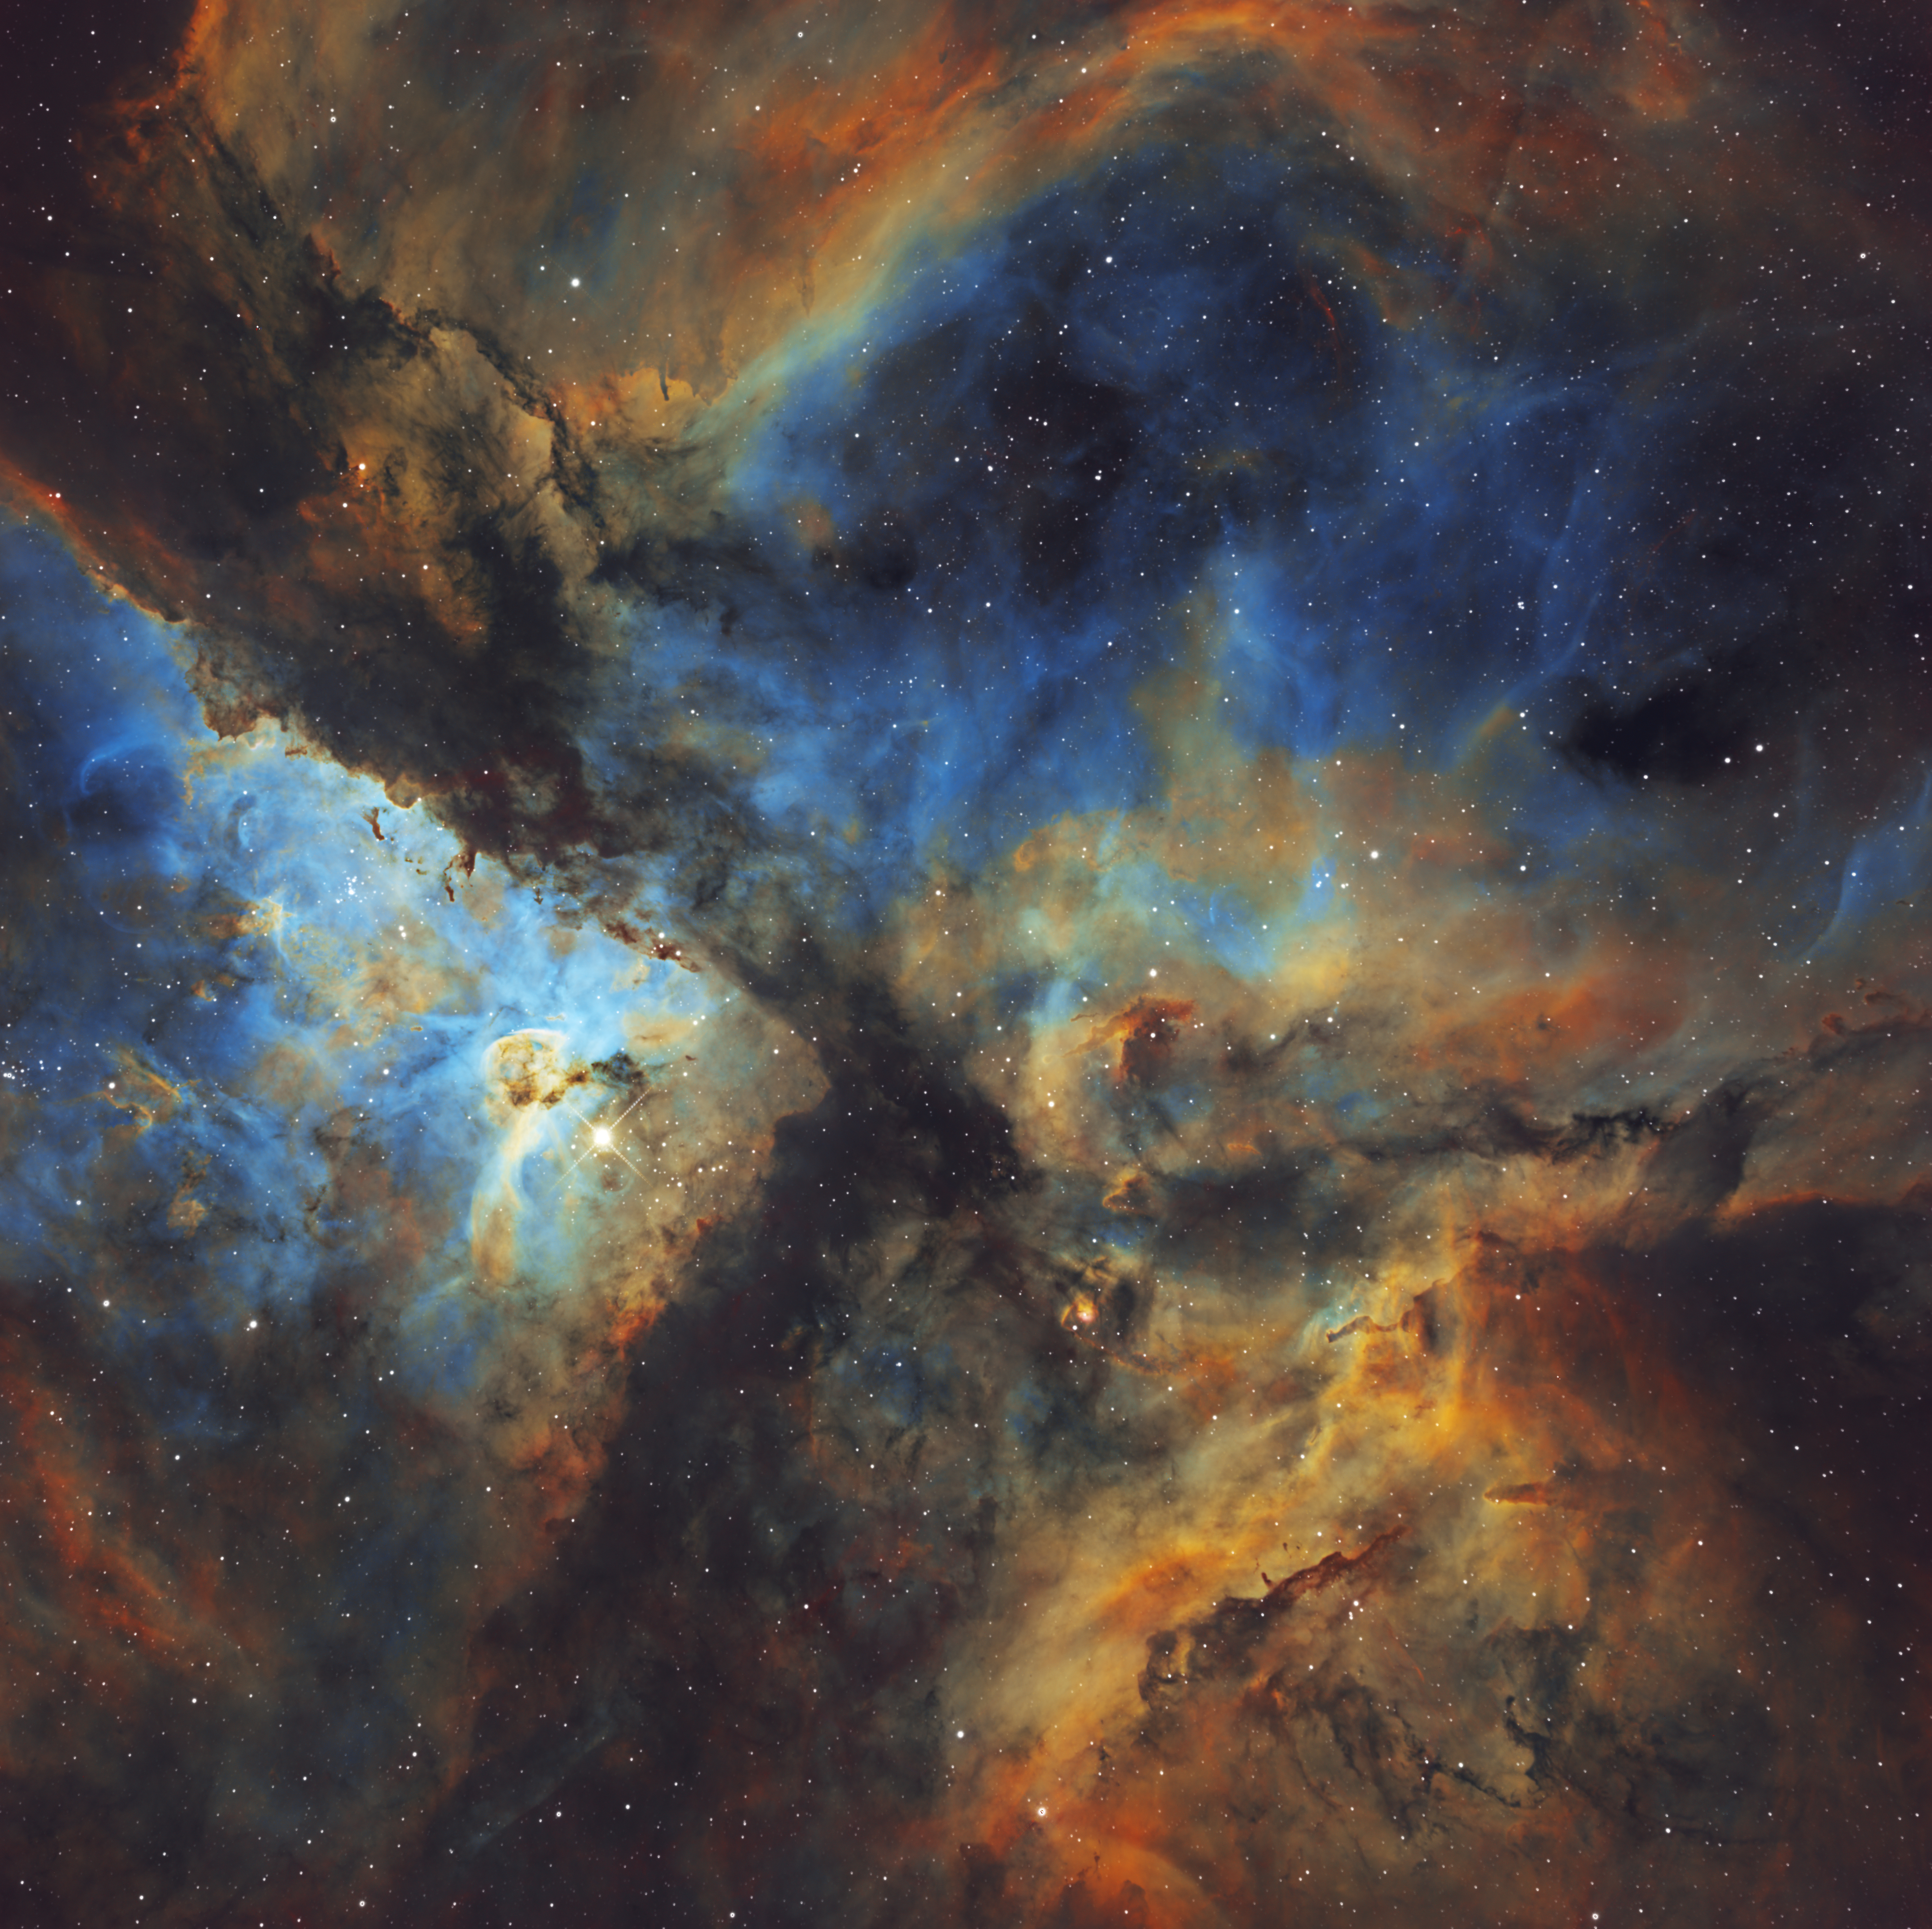 100+] Carina Nebula Wallpapers | Wallpapers.com